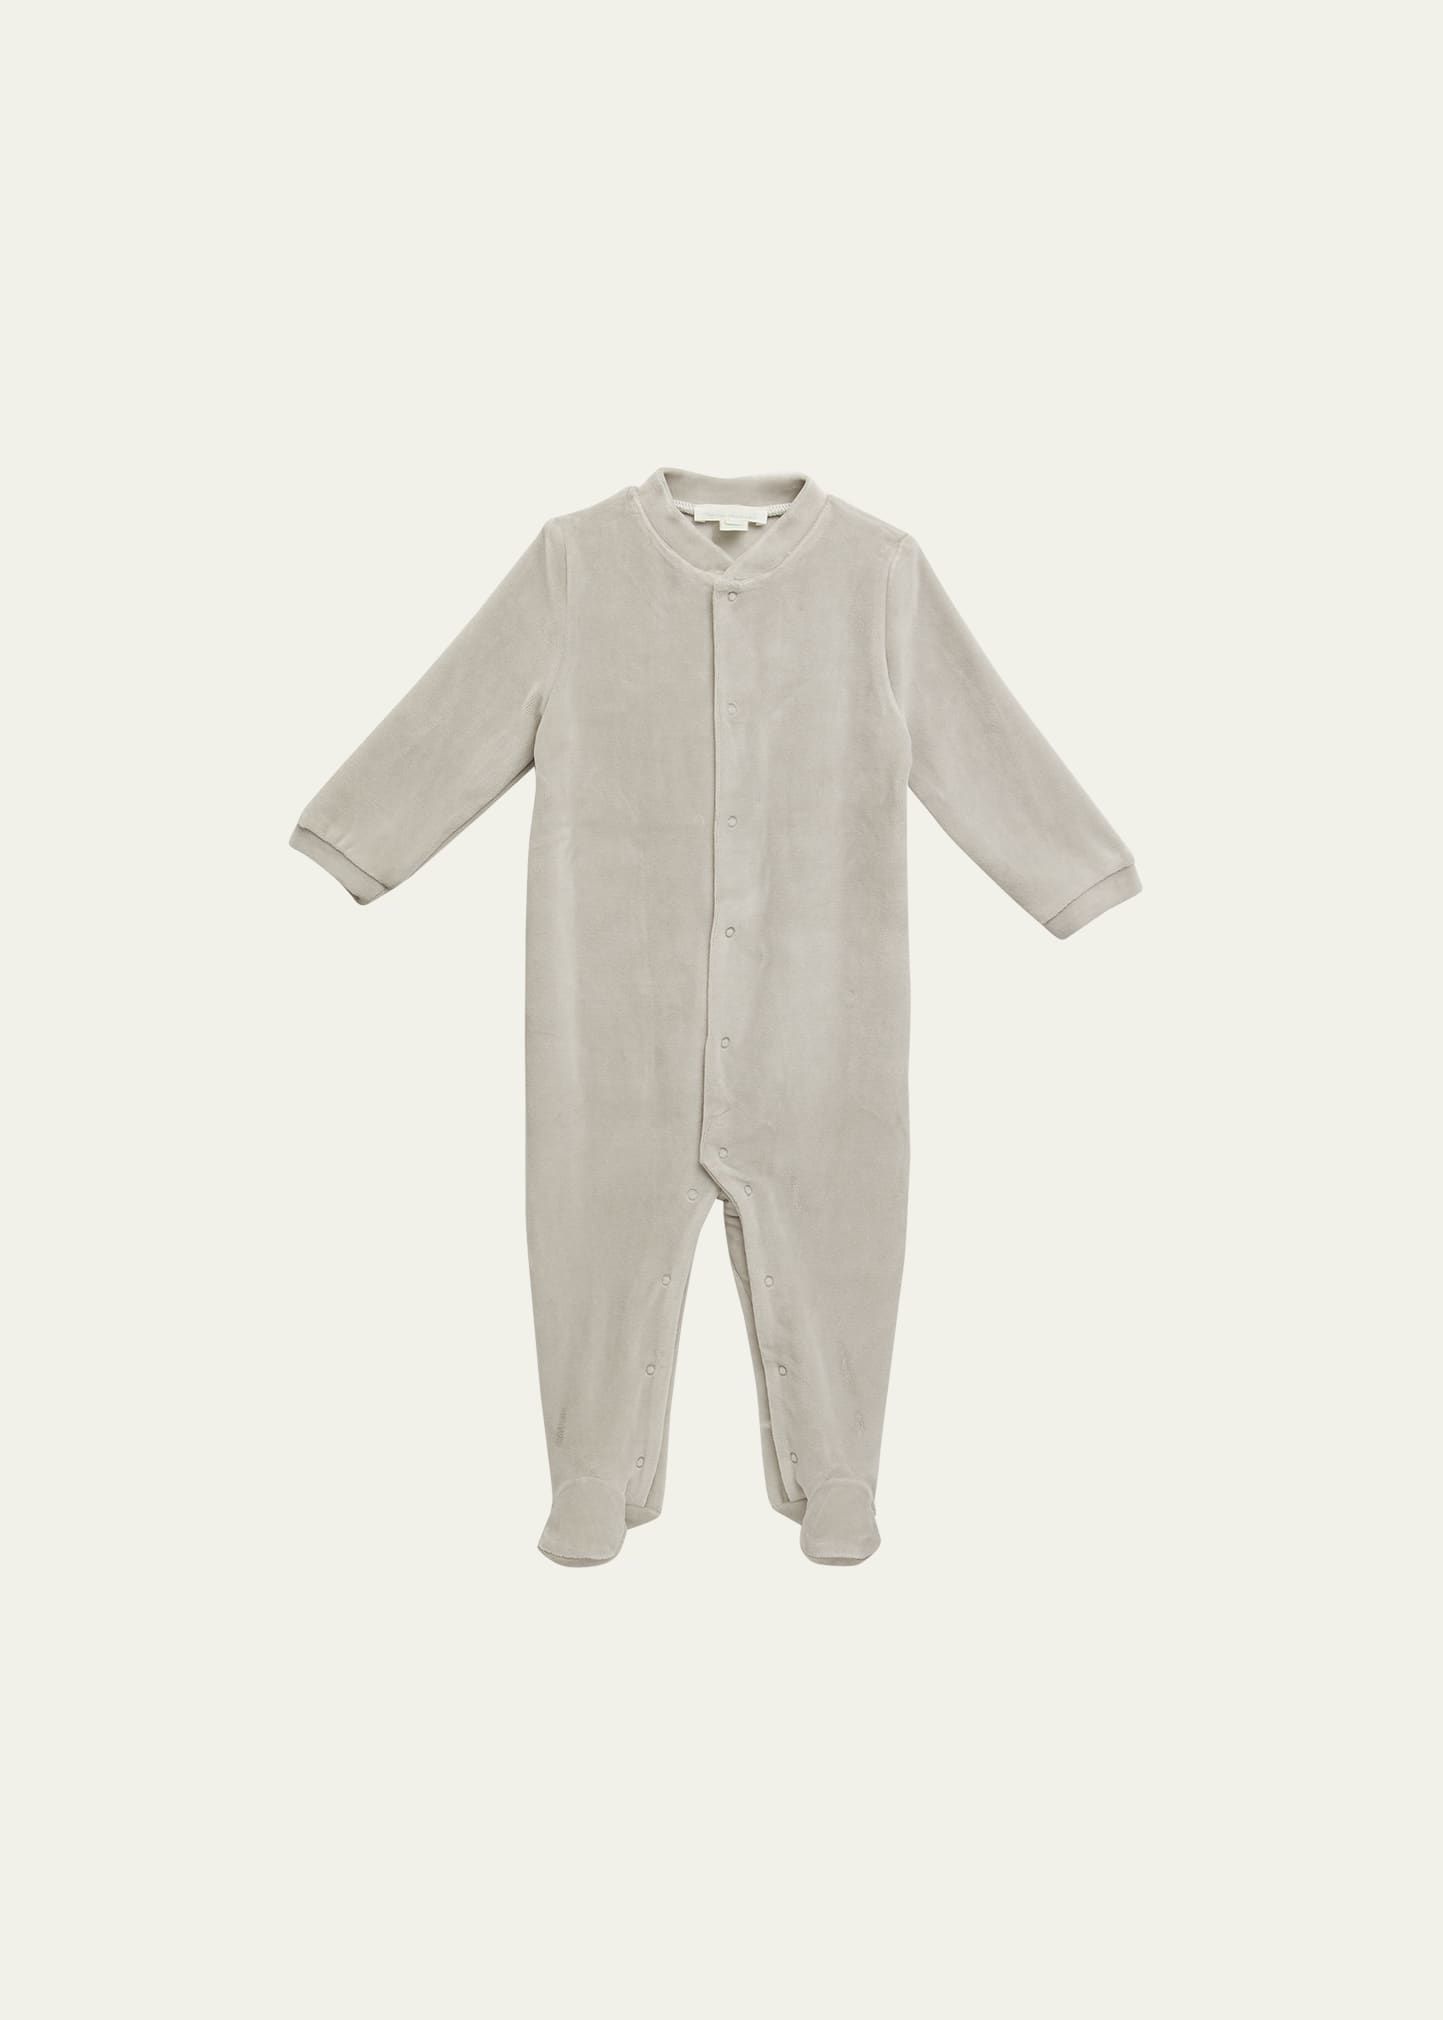 Marie Chantal Girl's Velour Golden Angel Wing Footie Pajamas, Size Newborn-18M